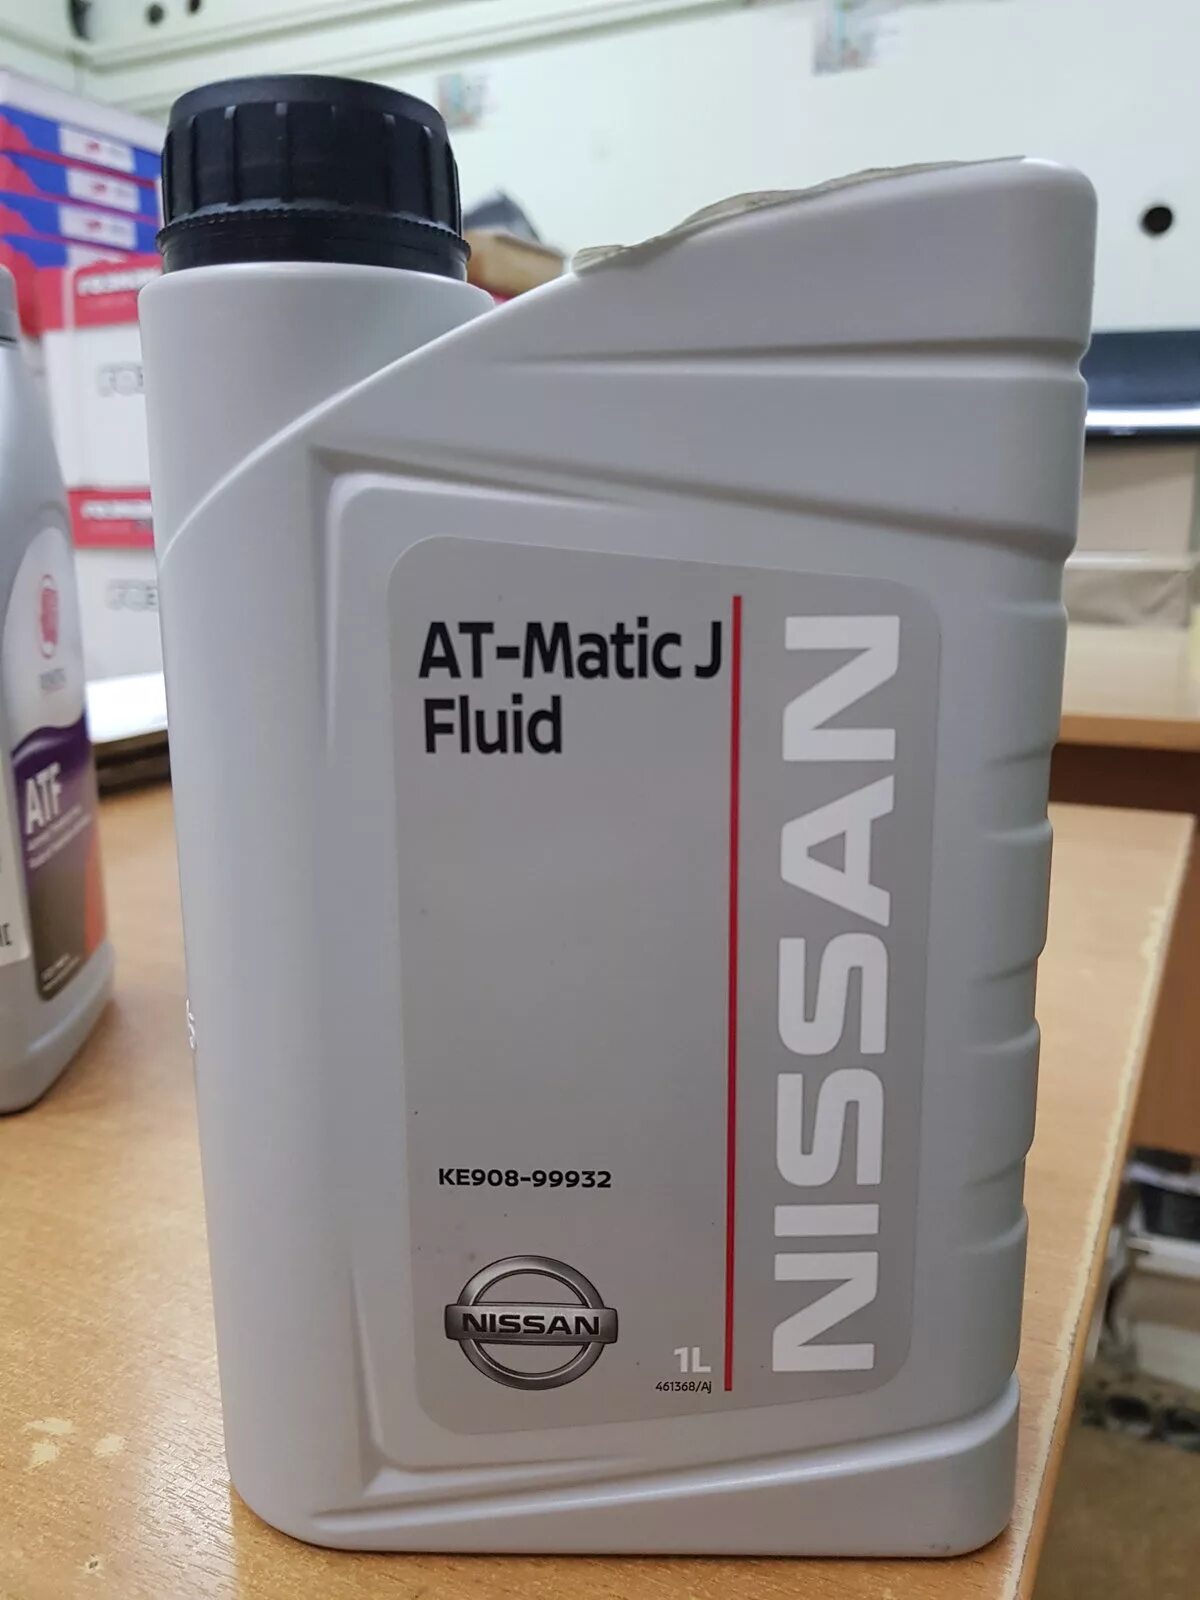 Nissan at-matic Fluid j 1л. Nissan ATF matic j Fluid. Matic j Fluid ke908-99932 аналоги. Nissan ke90899932r.